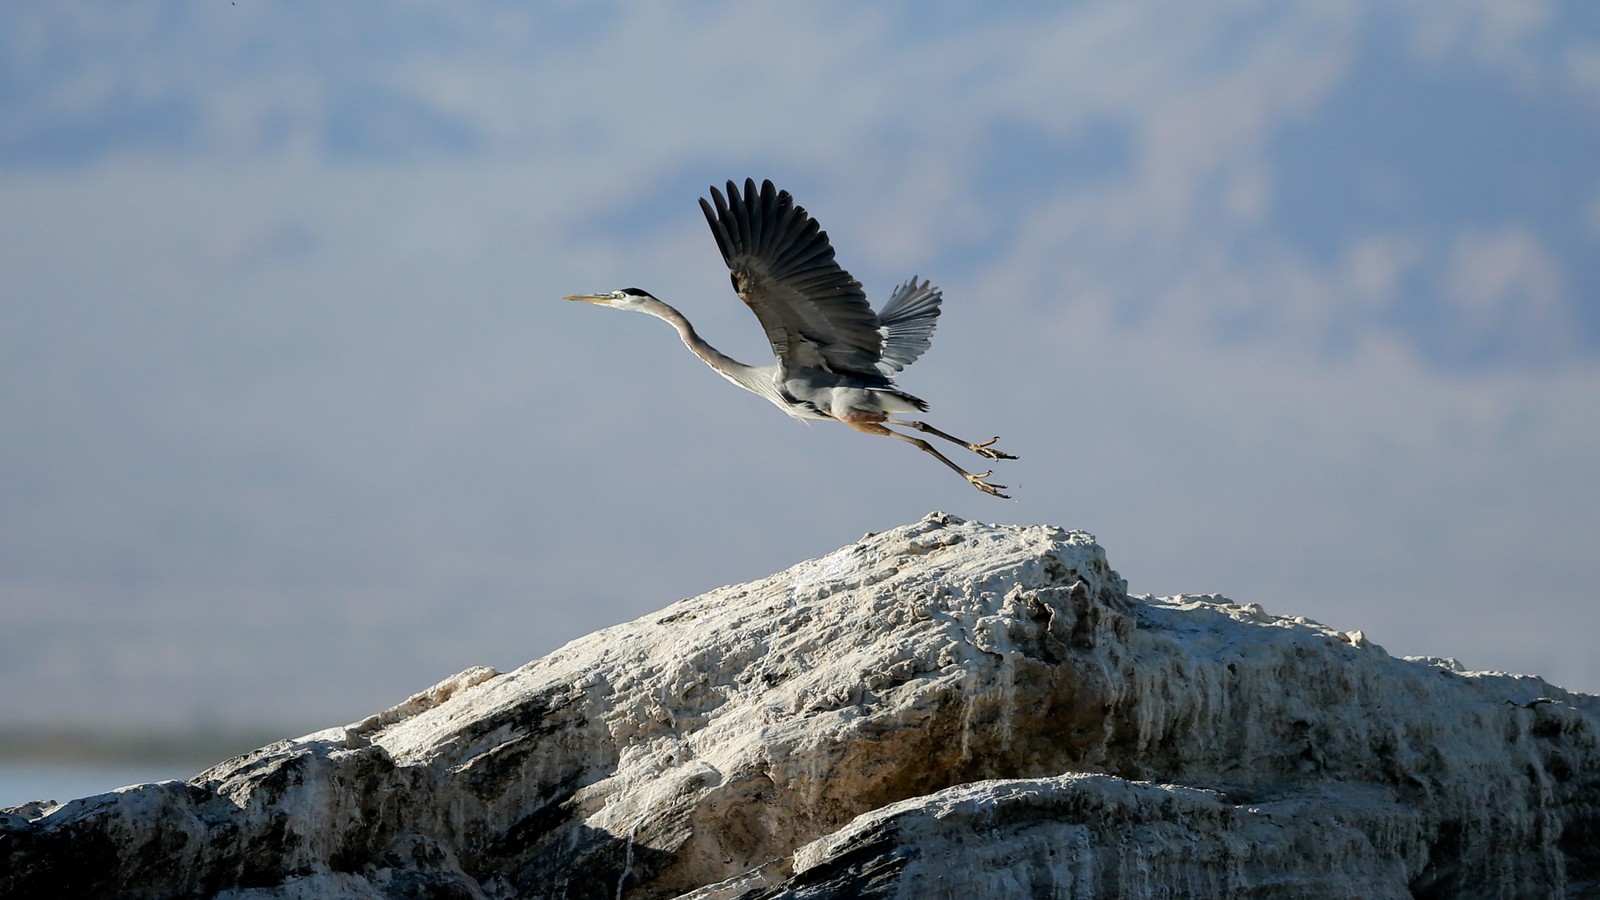 Great Blue Herons Build Nests Next to Their Predators - The Atlantic